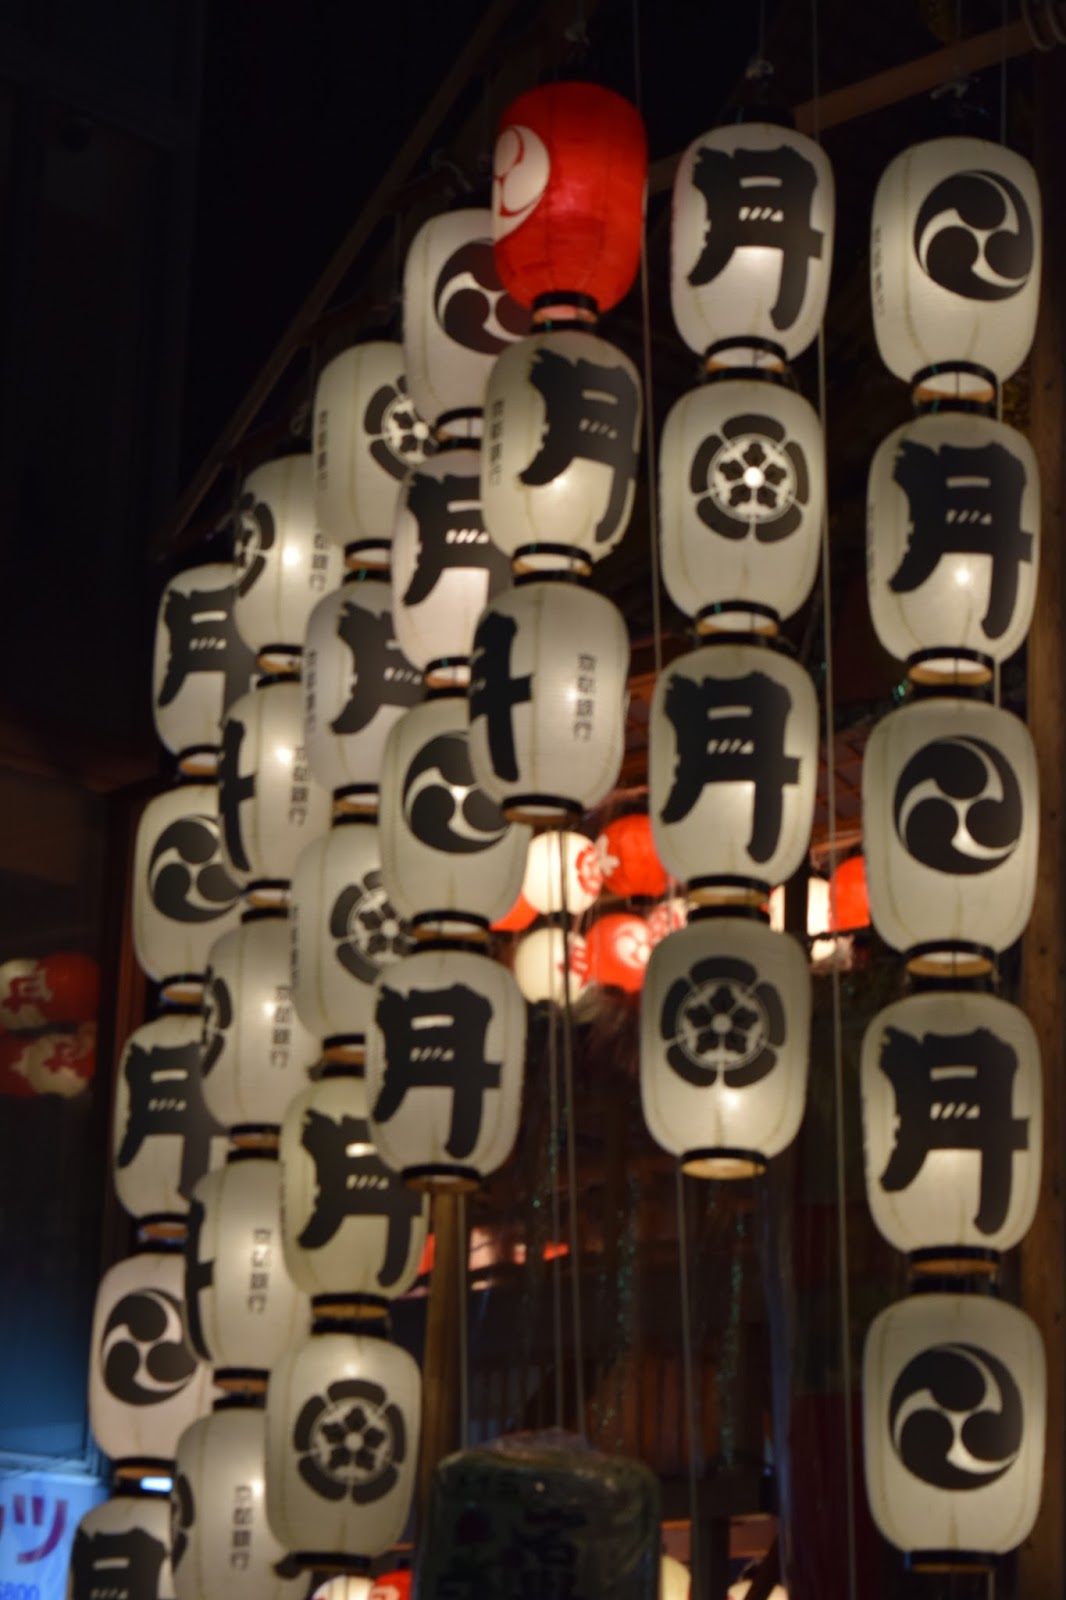 Gion Matsuri lanterns